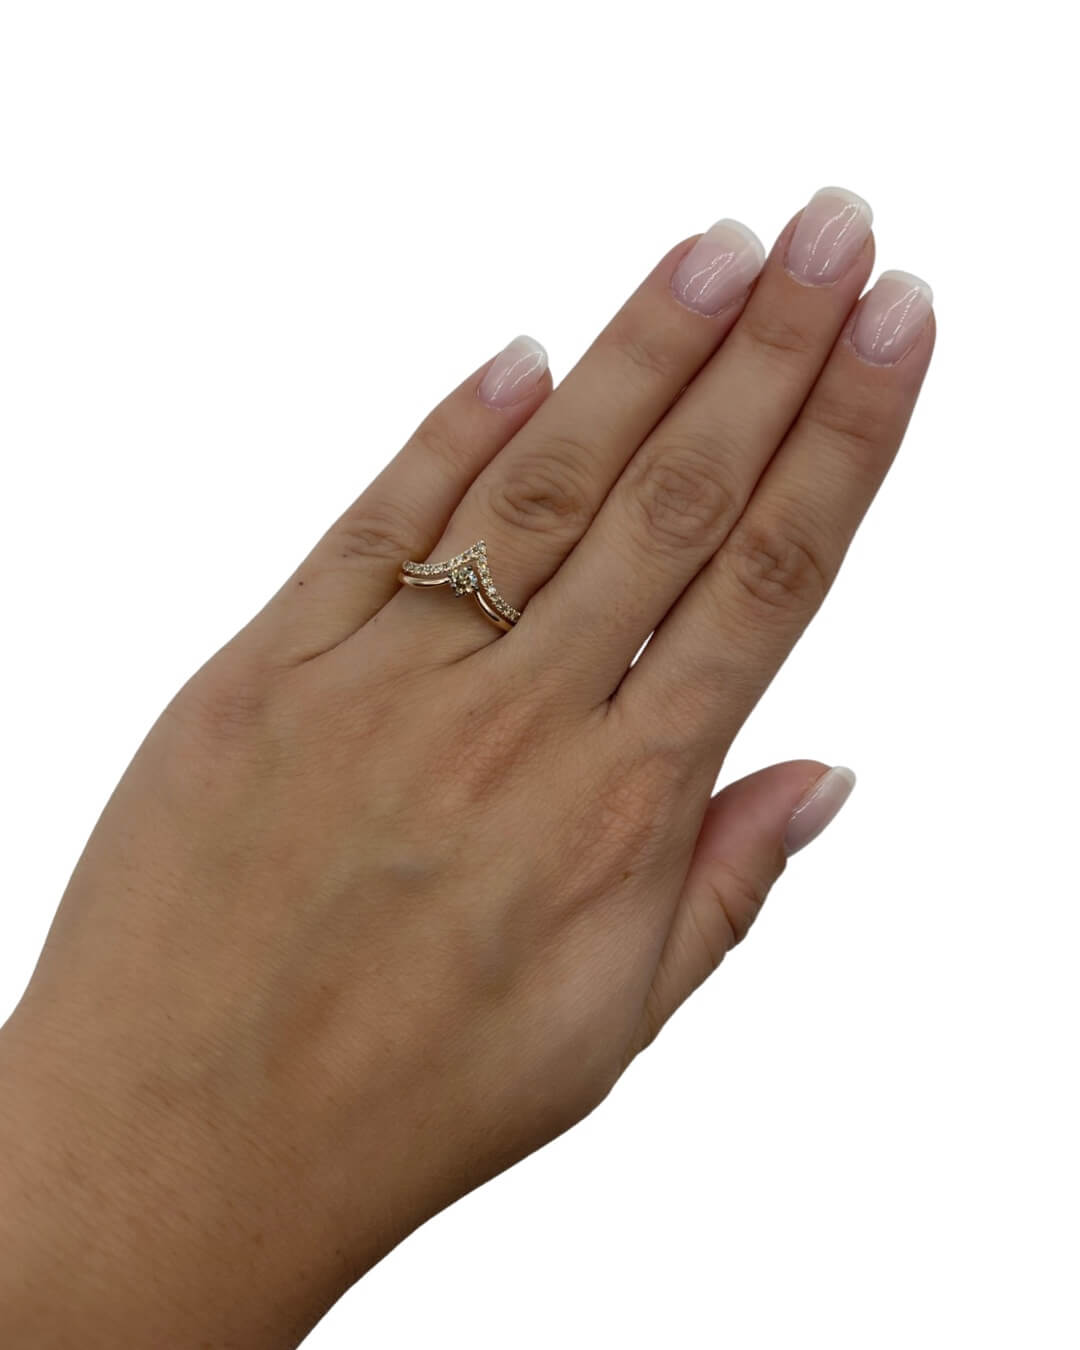 Inel din Aur Roz 14K cu Diamante 0.47Ct, articol TREN 50, previzualizare foto 1